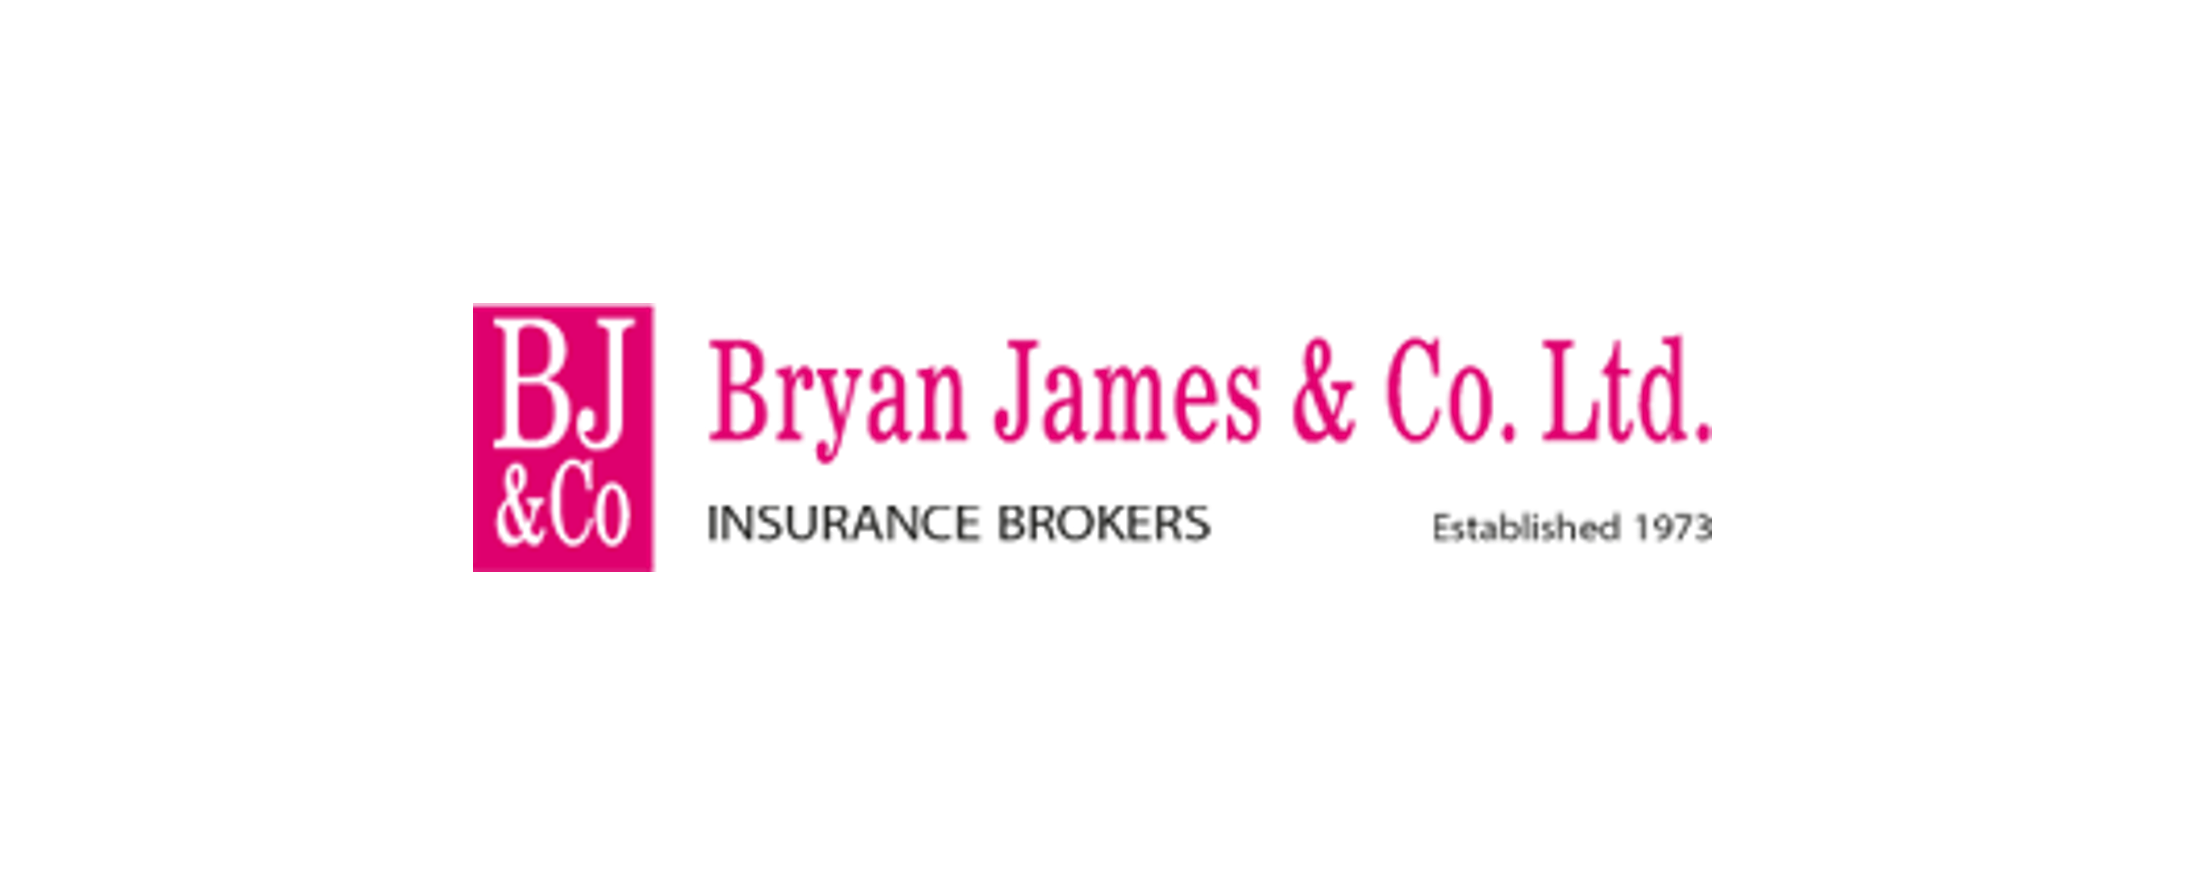 Bryan James & Co. Ltd. transfers to Adler Fairways Insurance Brokers Limited